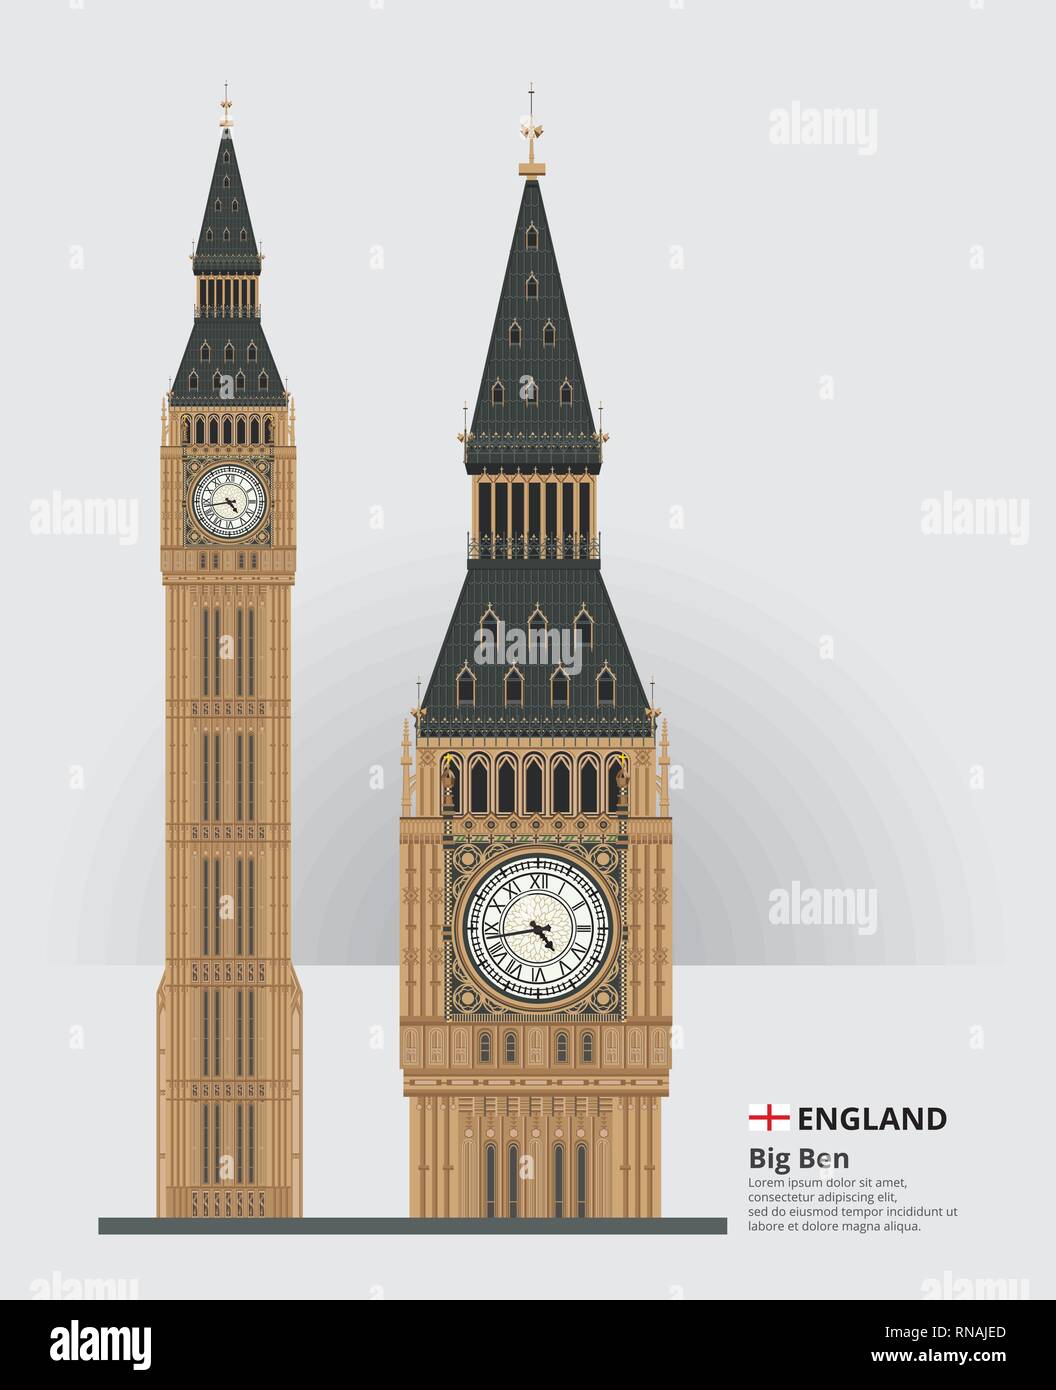 England Landmark Big Ben and Travel Attractions Vector Illustration Stock Vector